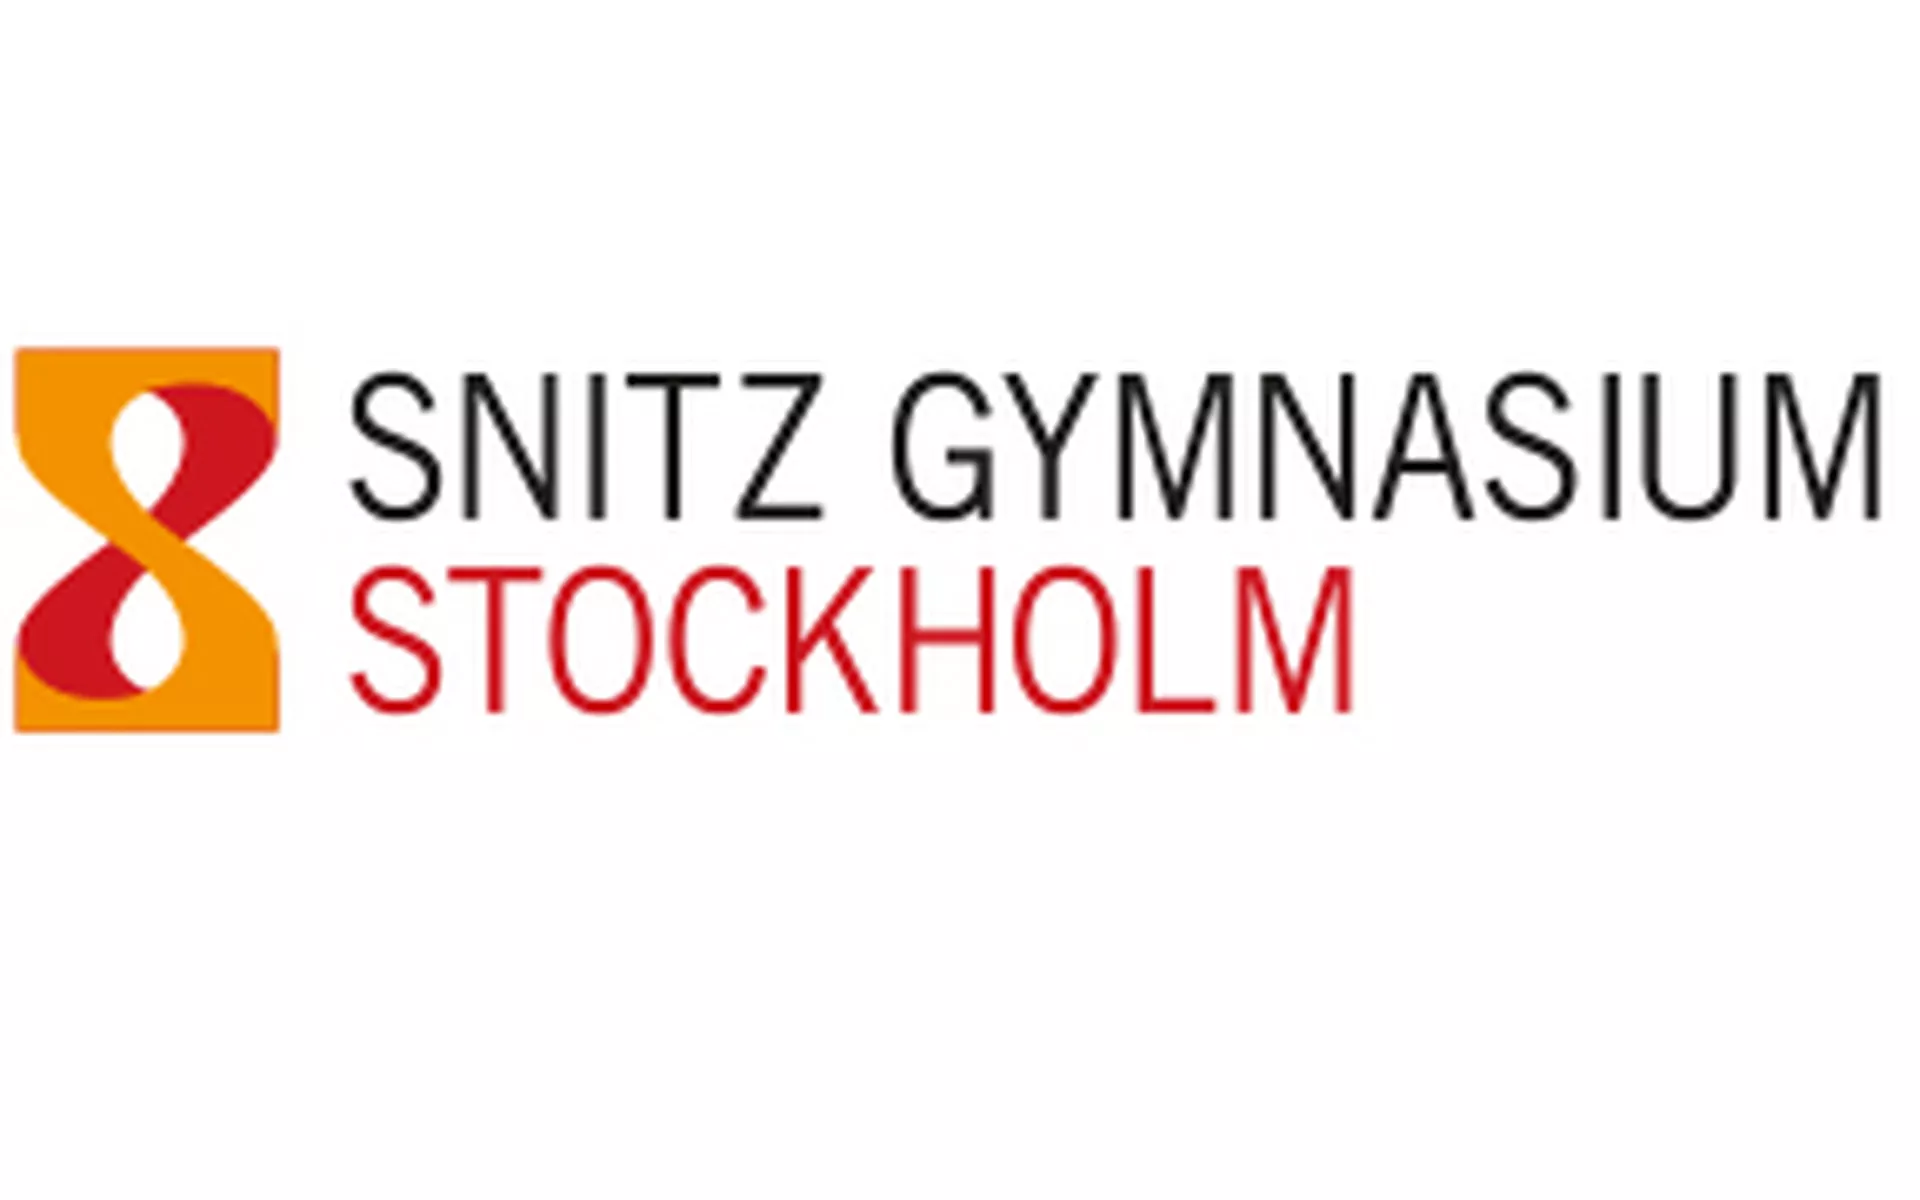 Snitz gymnasium - Stockholm